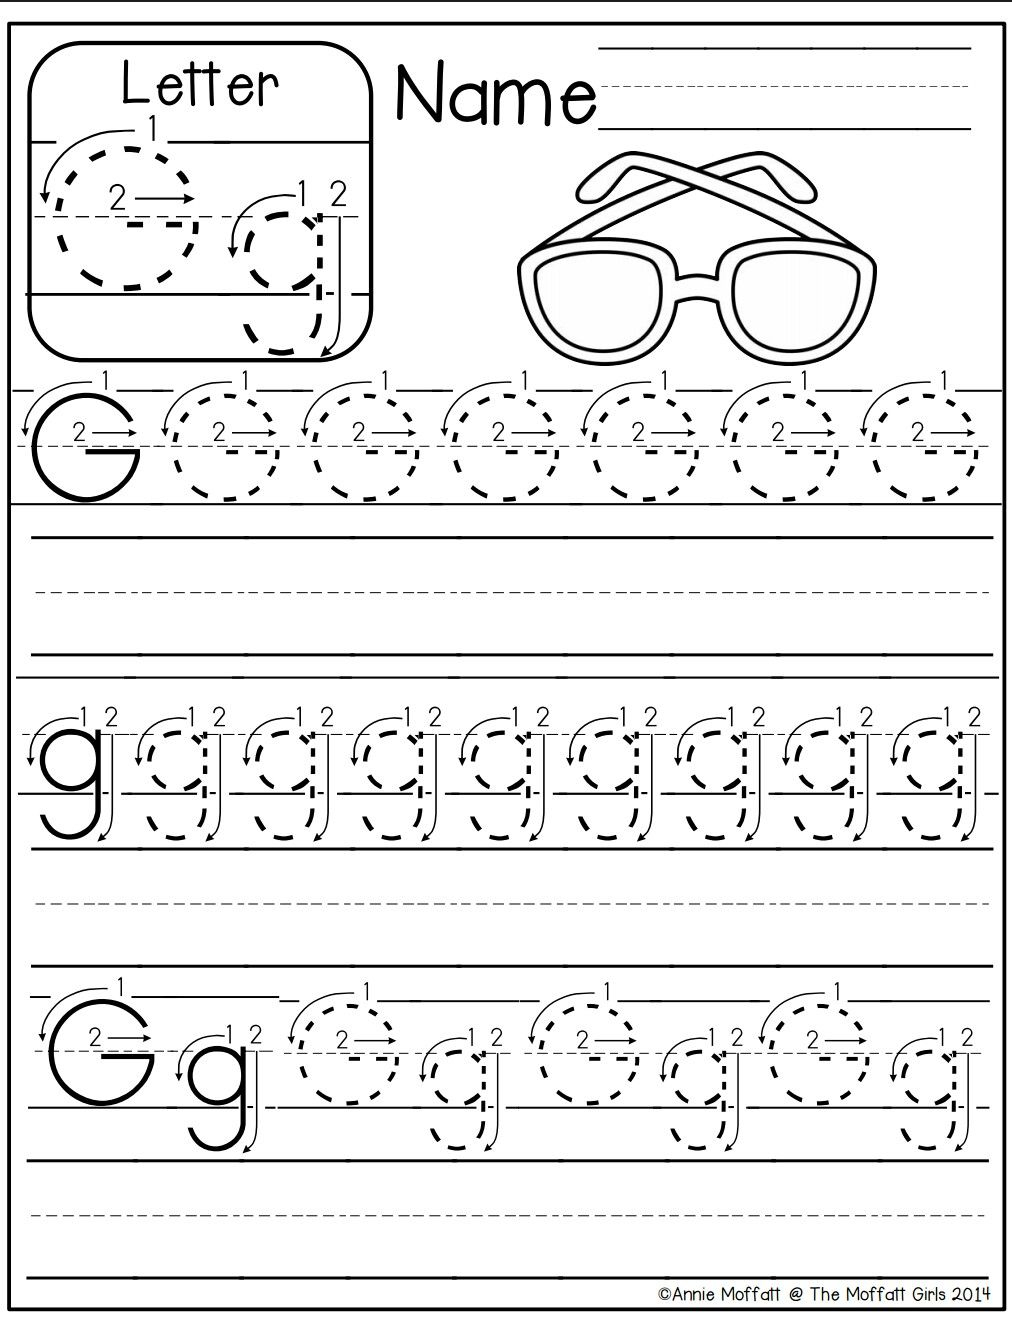 Letter G Worksheet | Alphabet Worksheets Kindergarten intended for Letter G Tracing Sheet